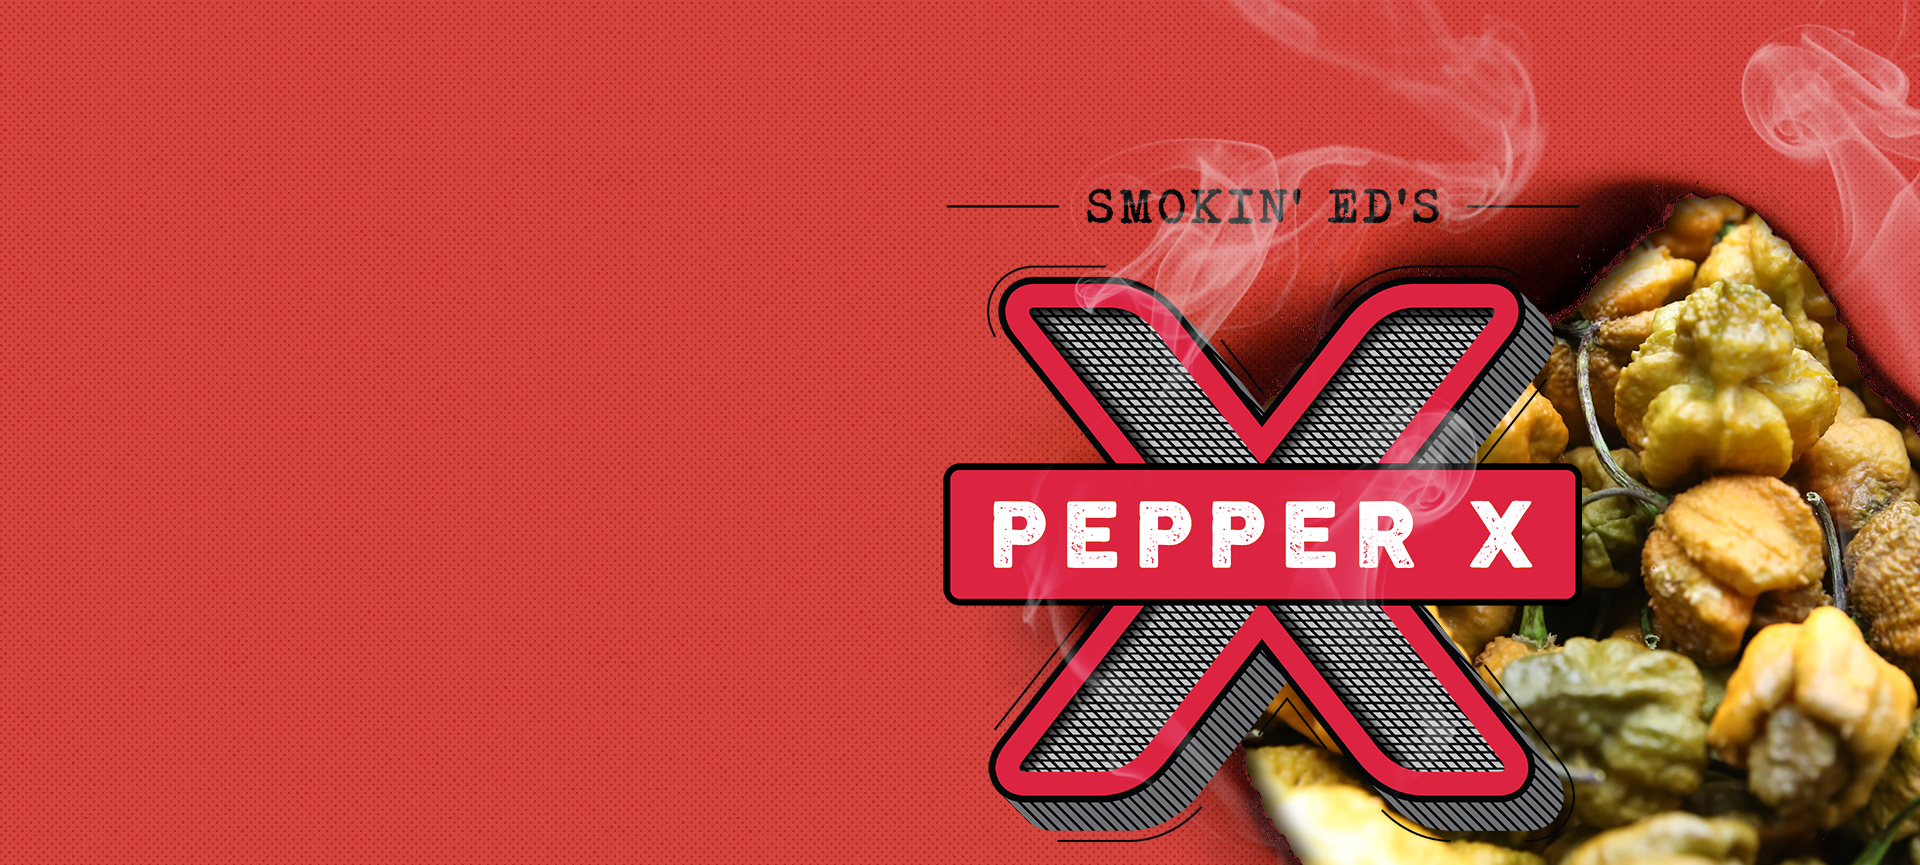 Pepper X Products – PuckerButt Pepper Company